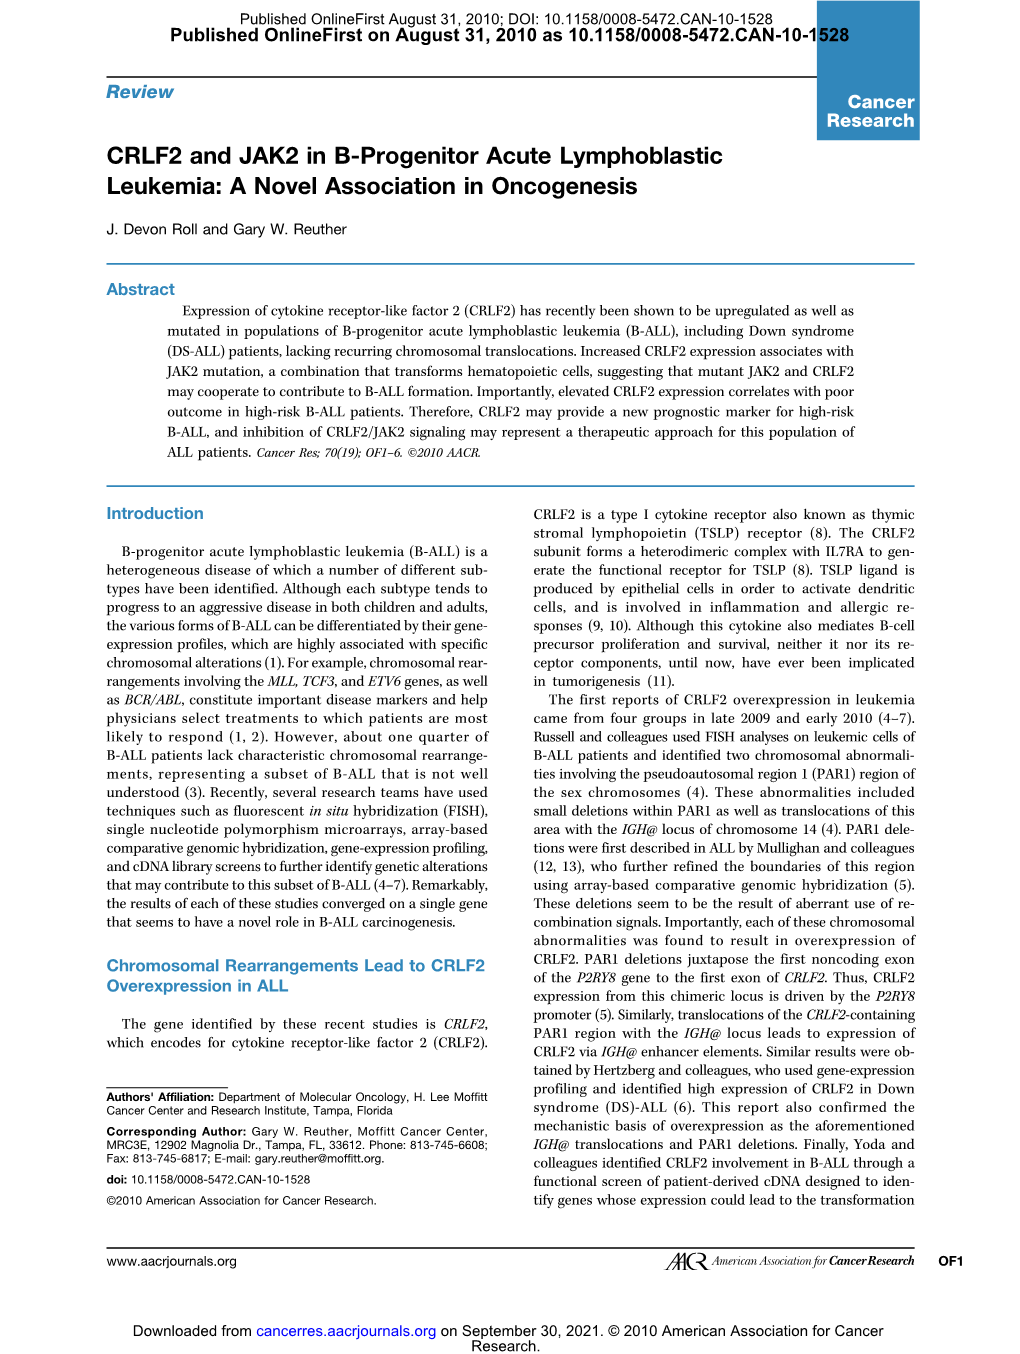 CRLF2 and JAK2 in B-Progenitor Acute Lymphoblastic Leukemia: a Novel Association in Oncogenesis